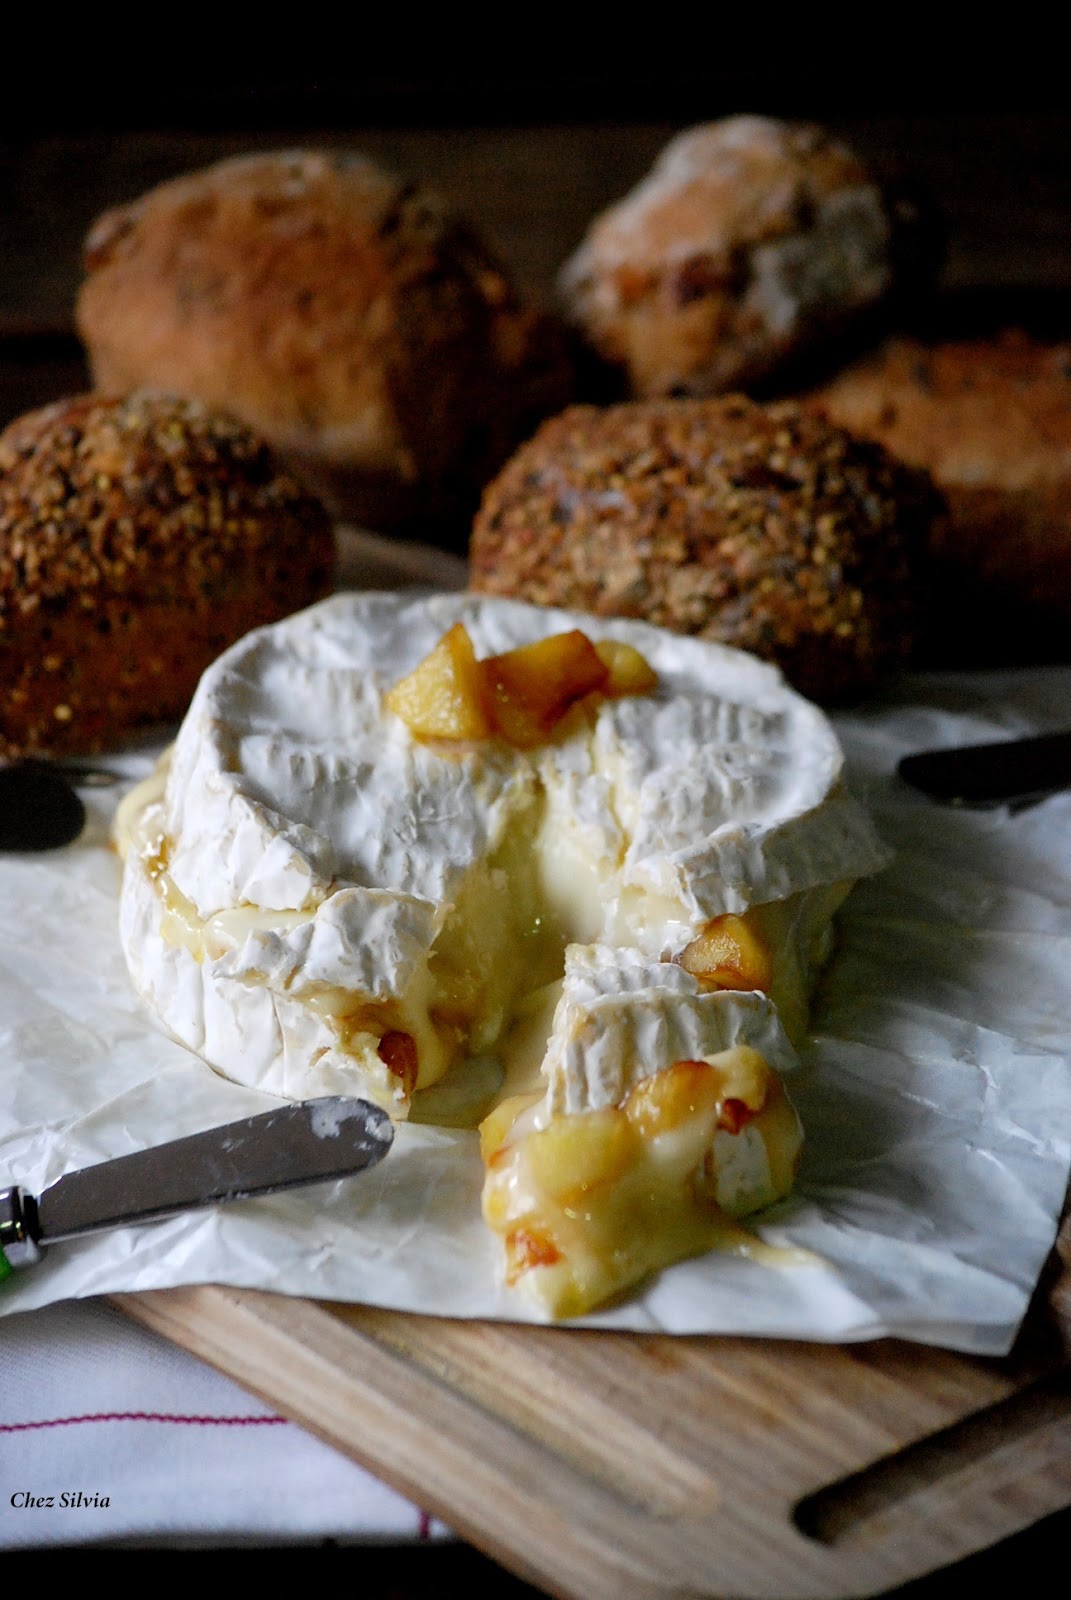 Camembert con tatin de manzana — Chez Silvia